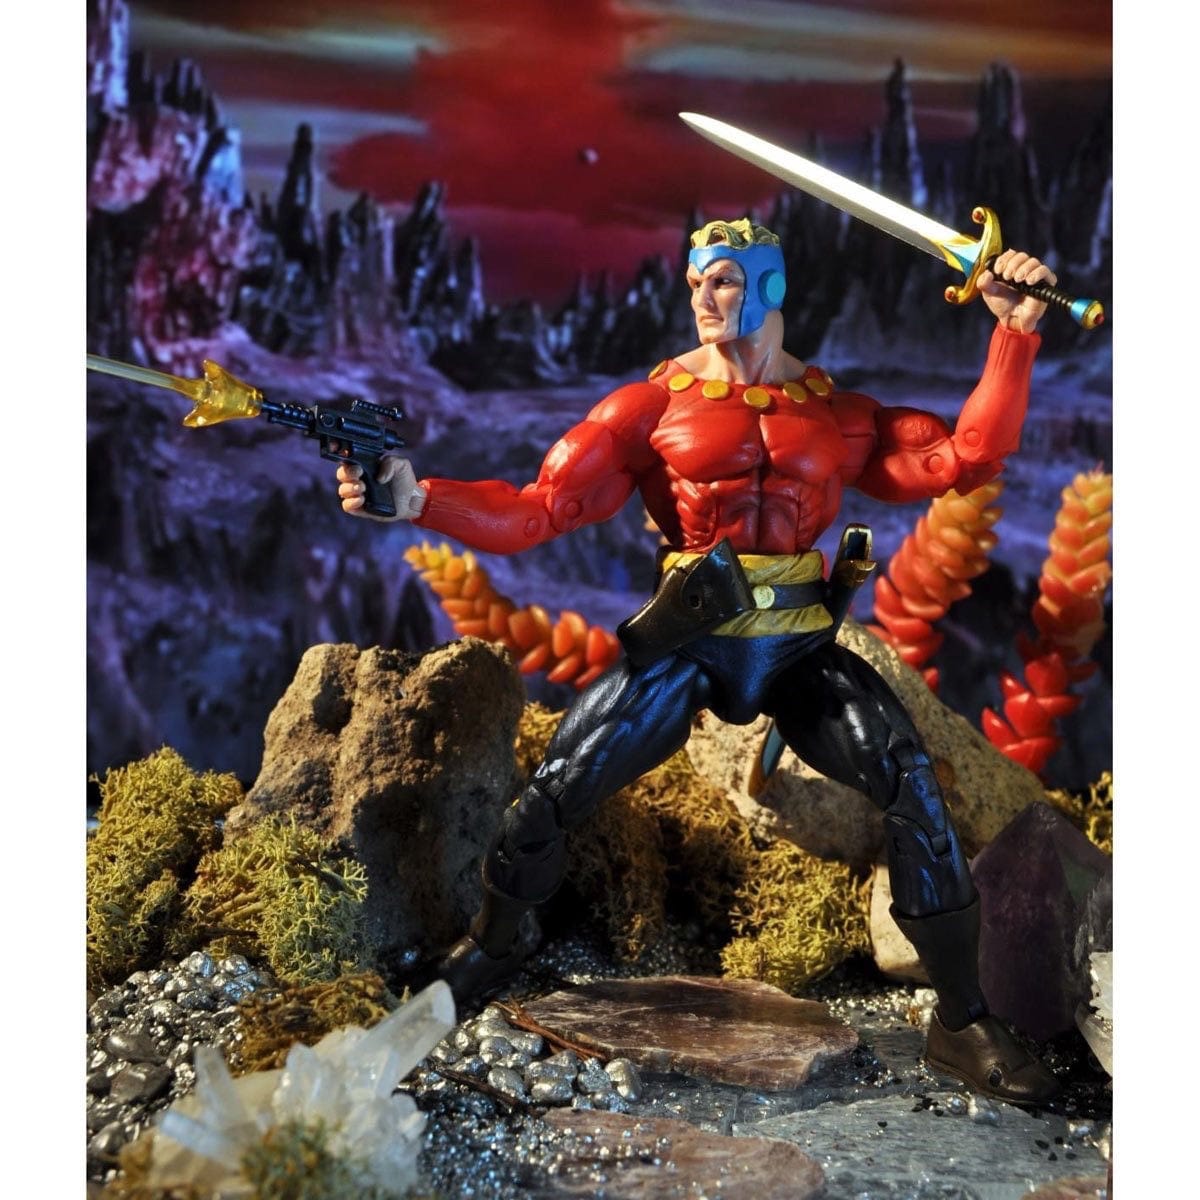 NECA King Features The Original Superheroes Flash Gordon Action Figure